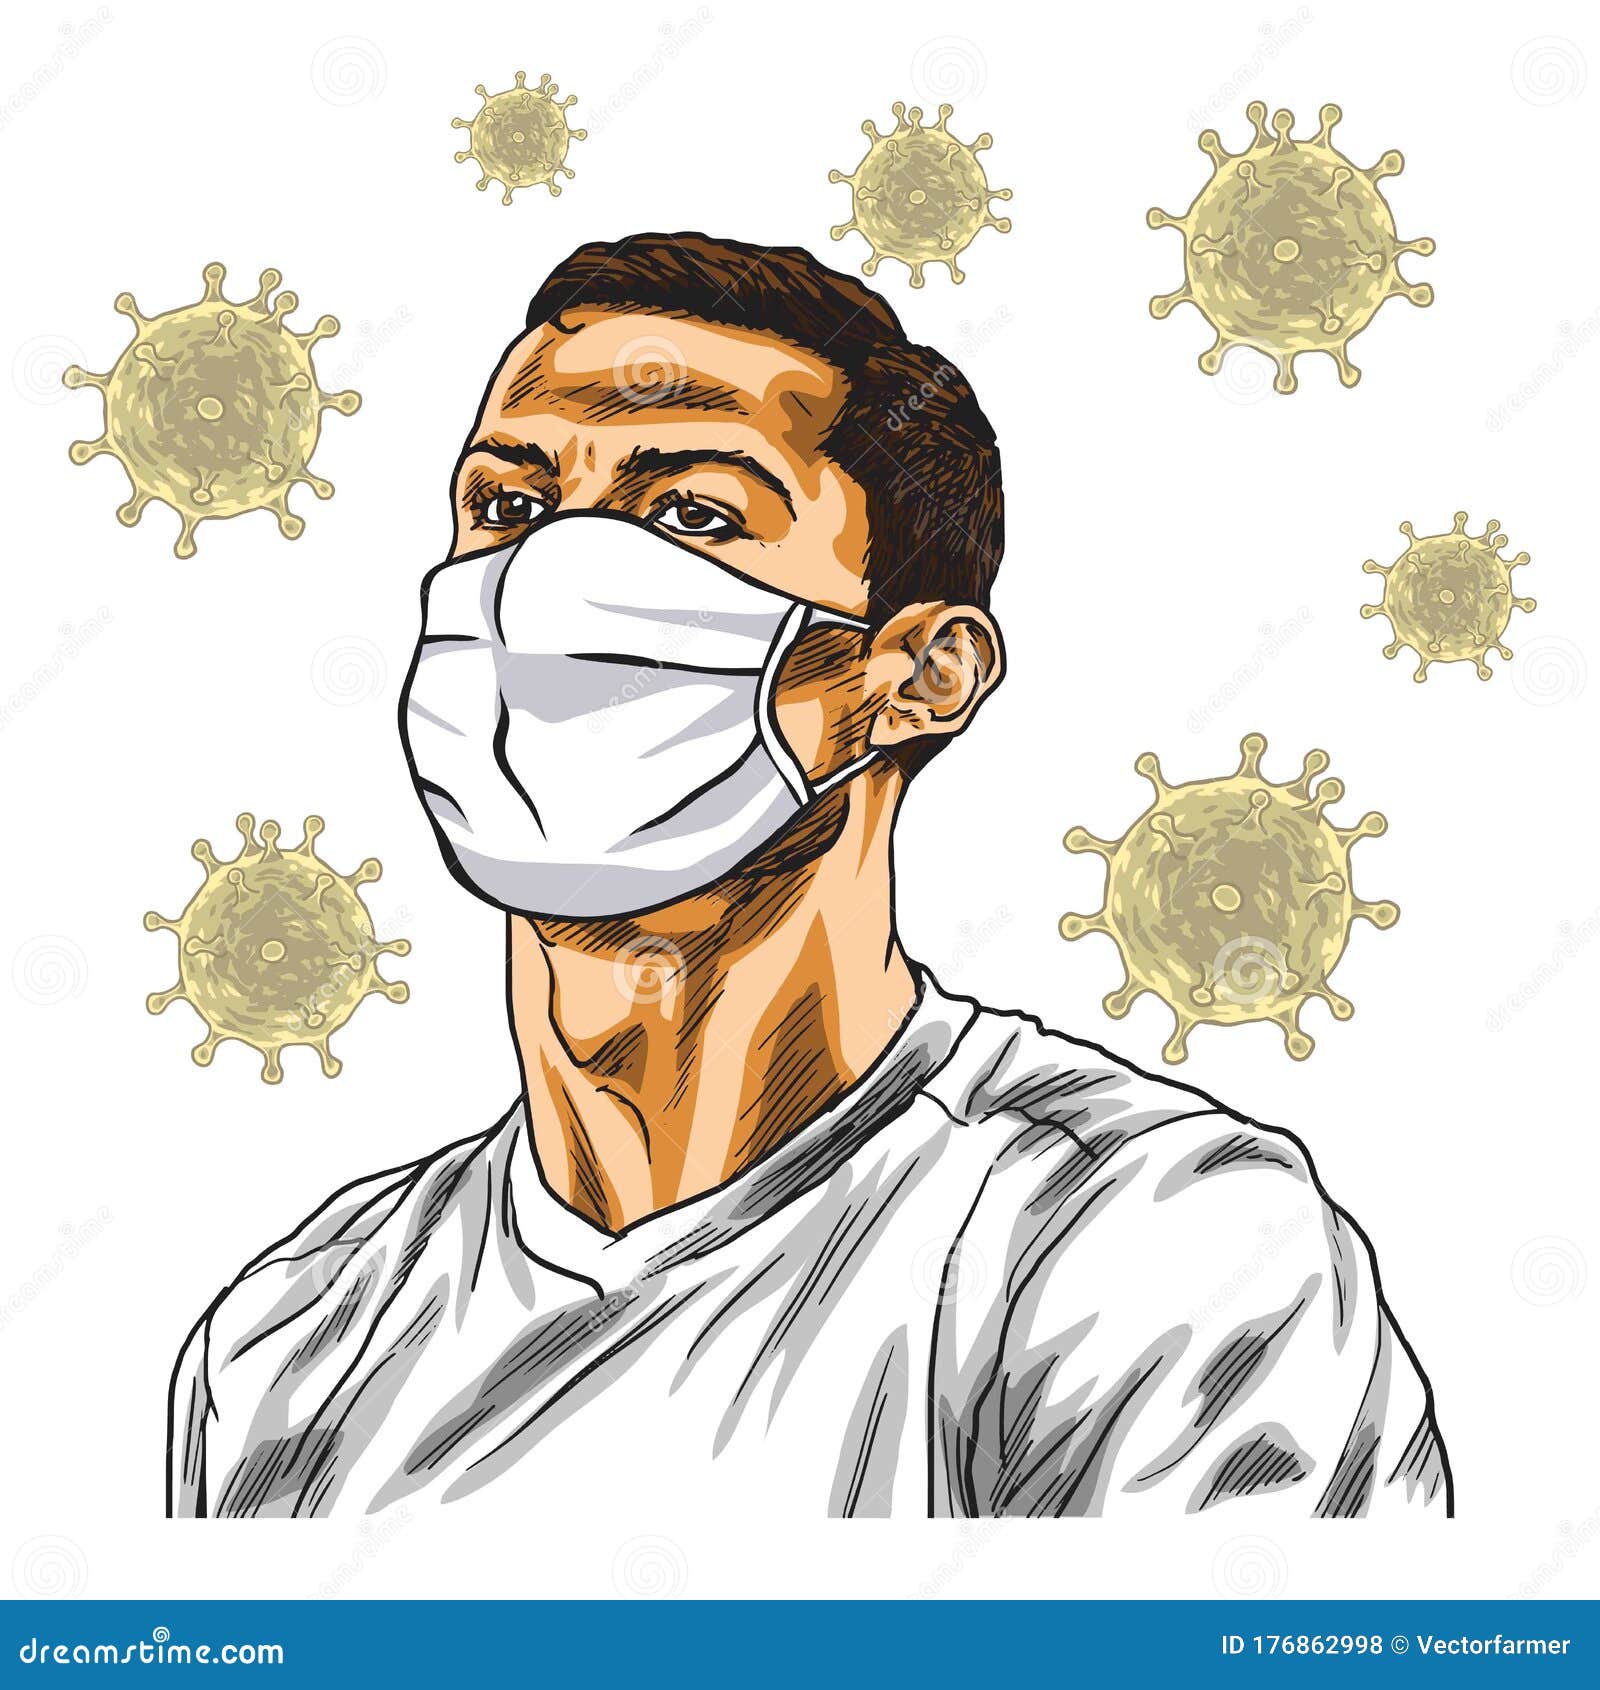 Cristiano Ronaldo Wearing Face Health Mask Anti Coronavirus Covid 19 Cartoon  Vector Portrait Drawing Illustration. Turin, March 26 Editorial Stock Photo  - Illustration of athlete, infected: 176862998